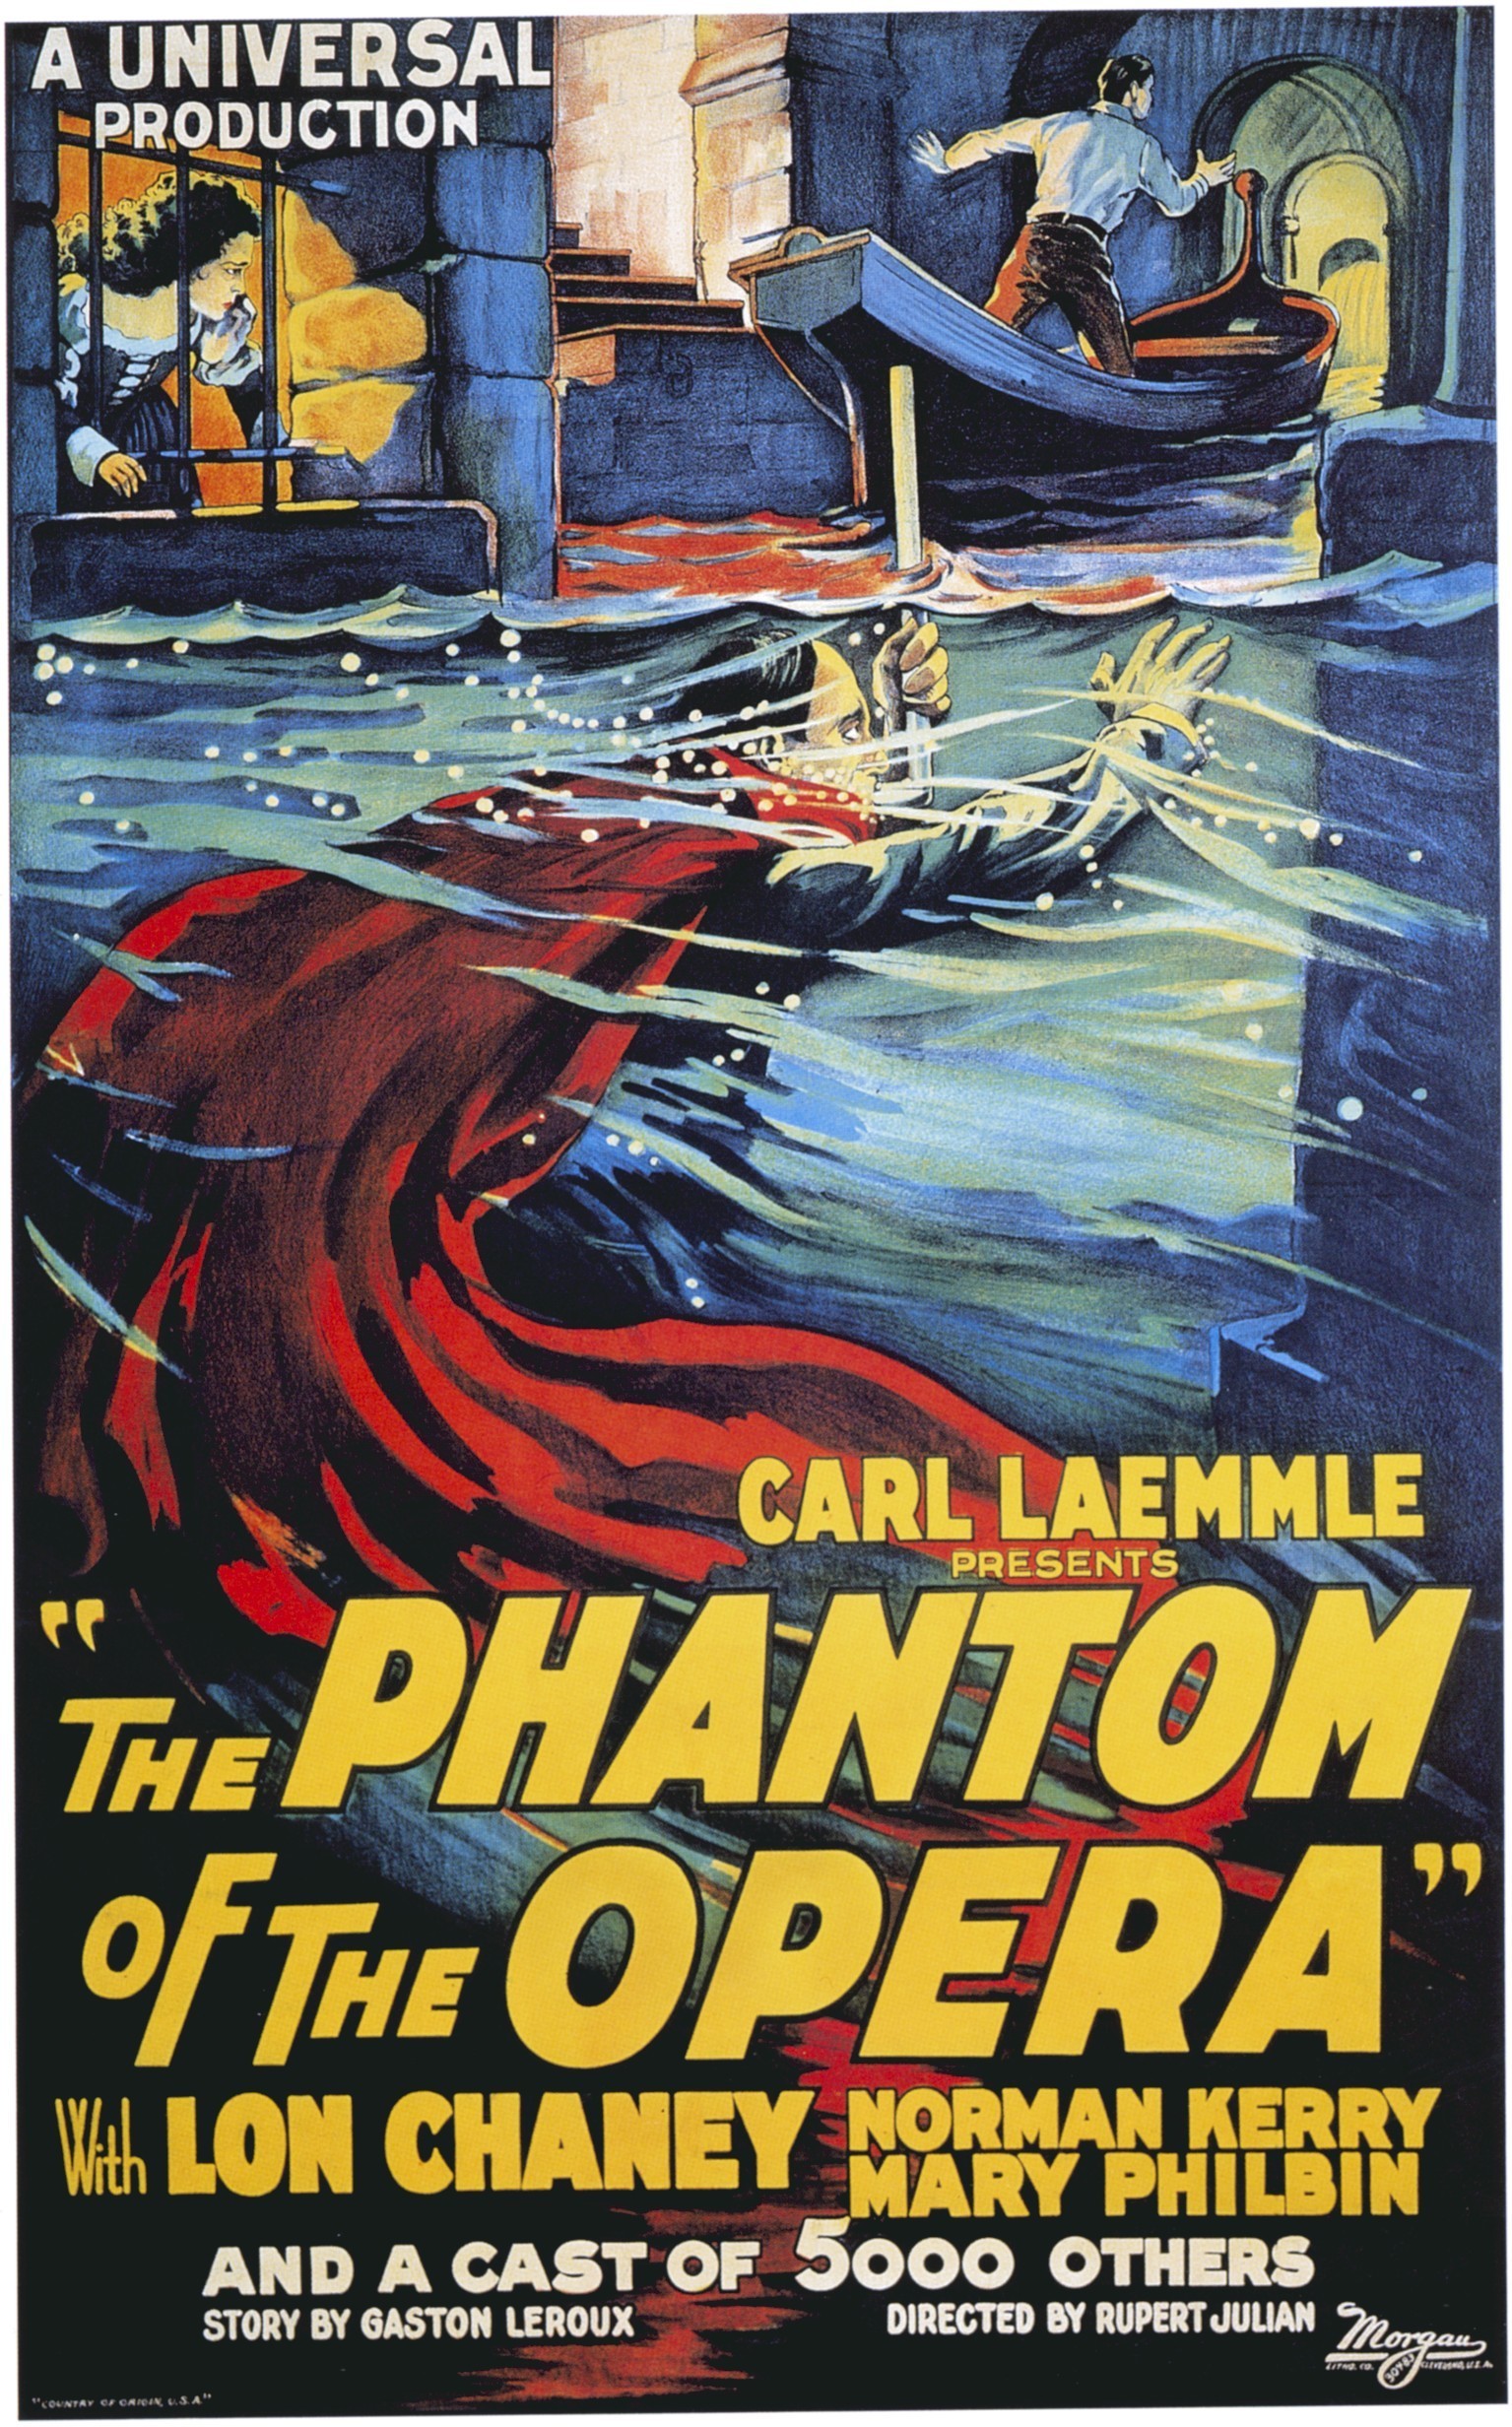 Phantom Of The Opera Online Gaming